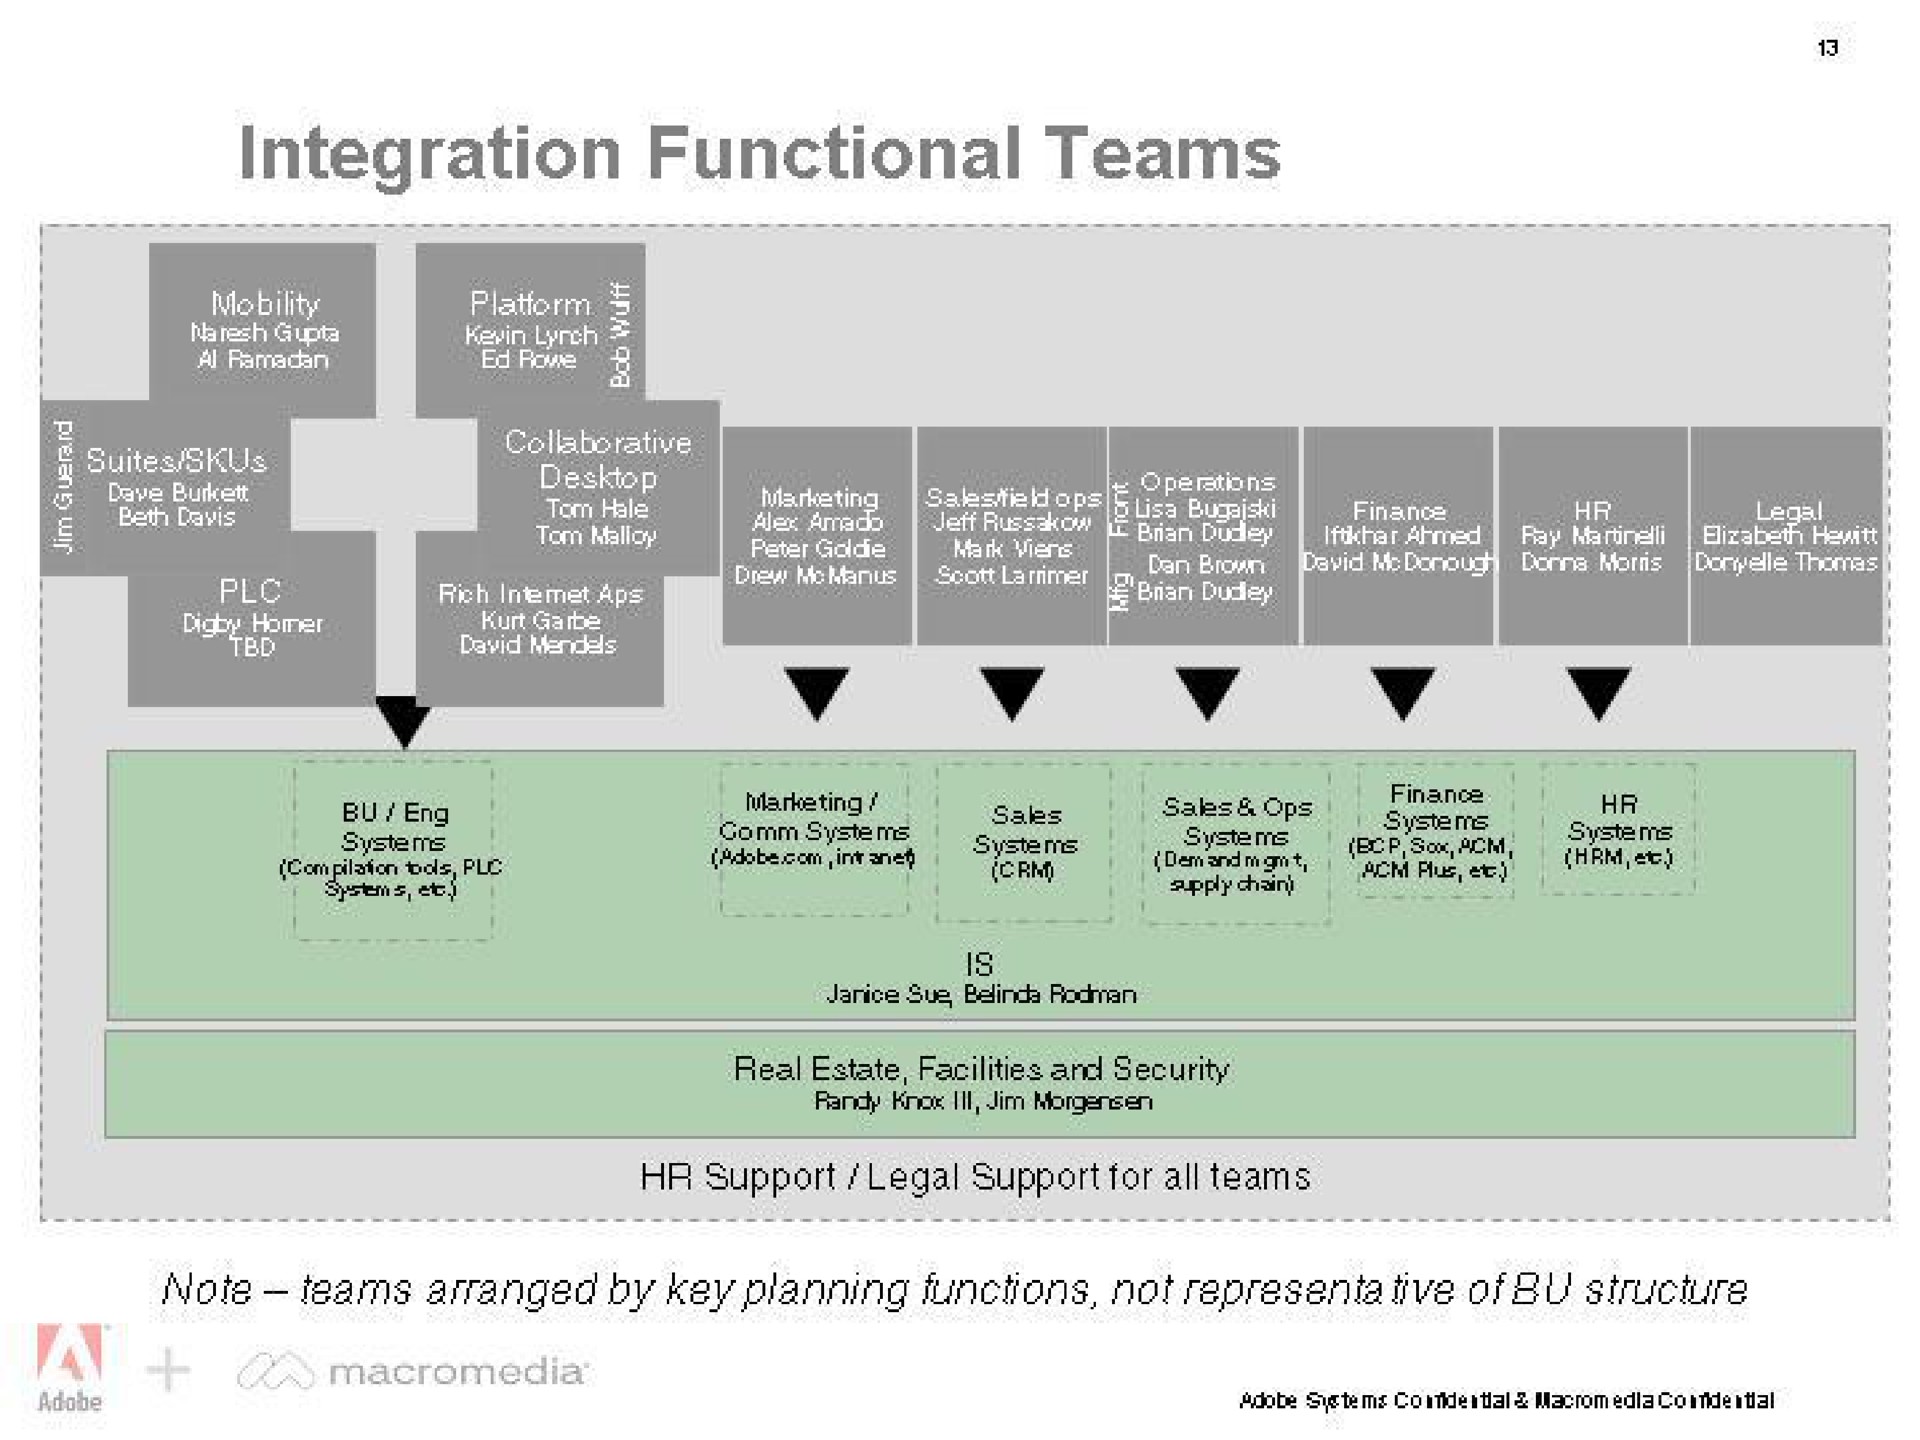 integration functional teams | Adobe